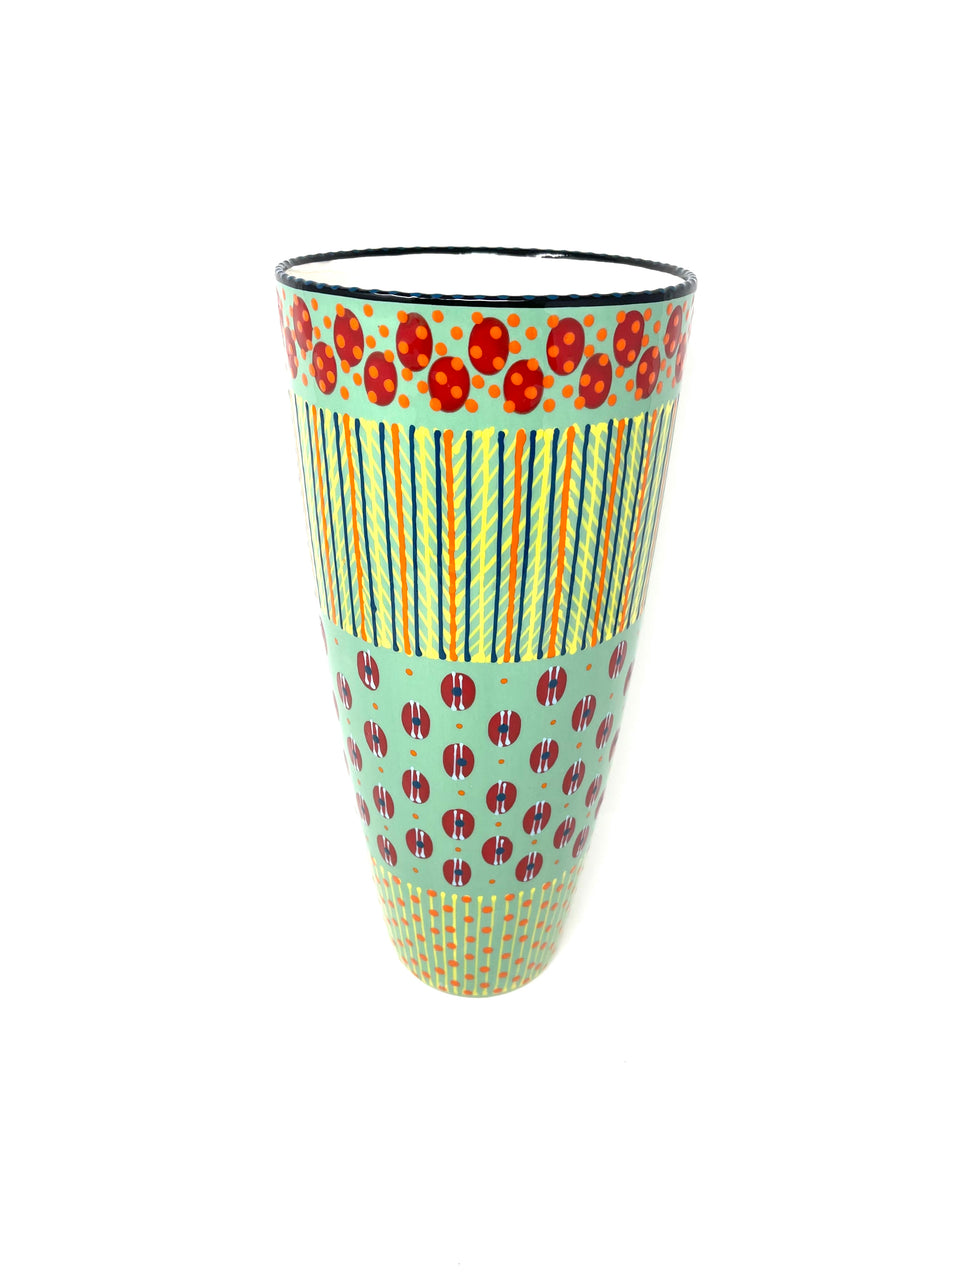 Potters Classic Vase